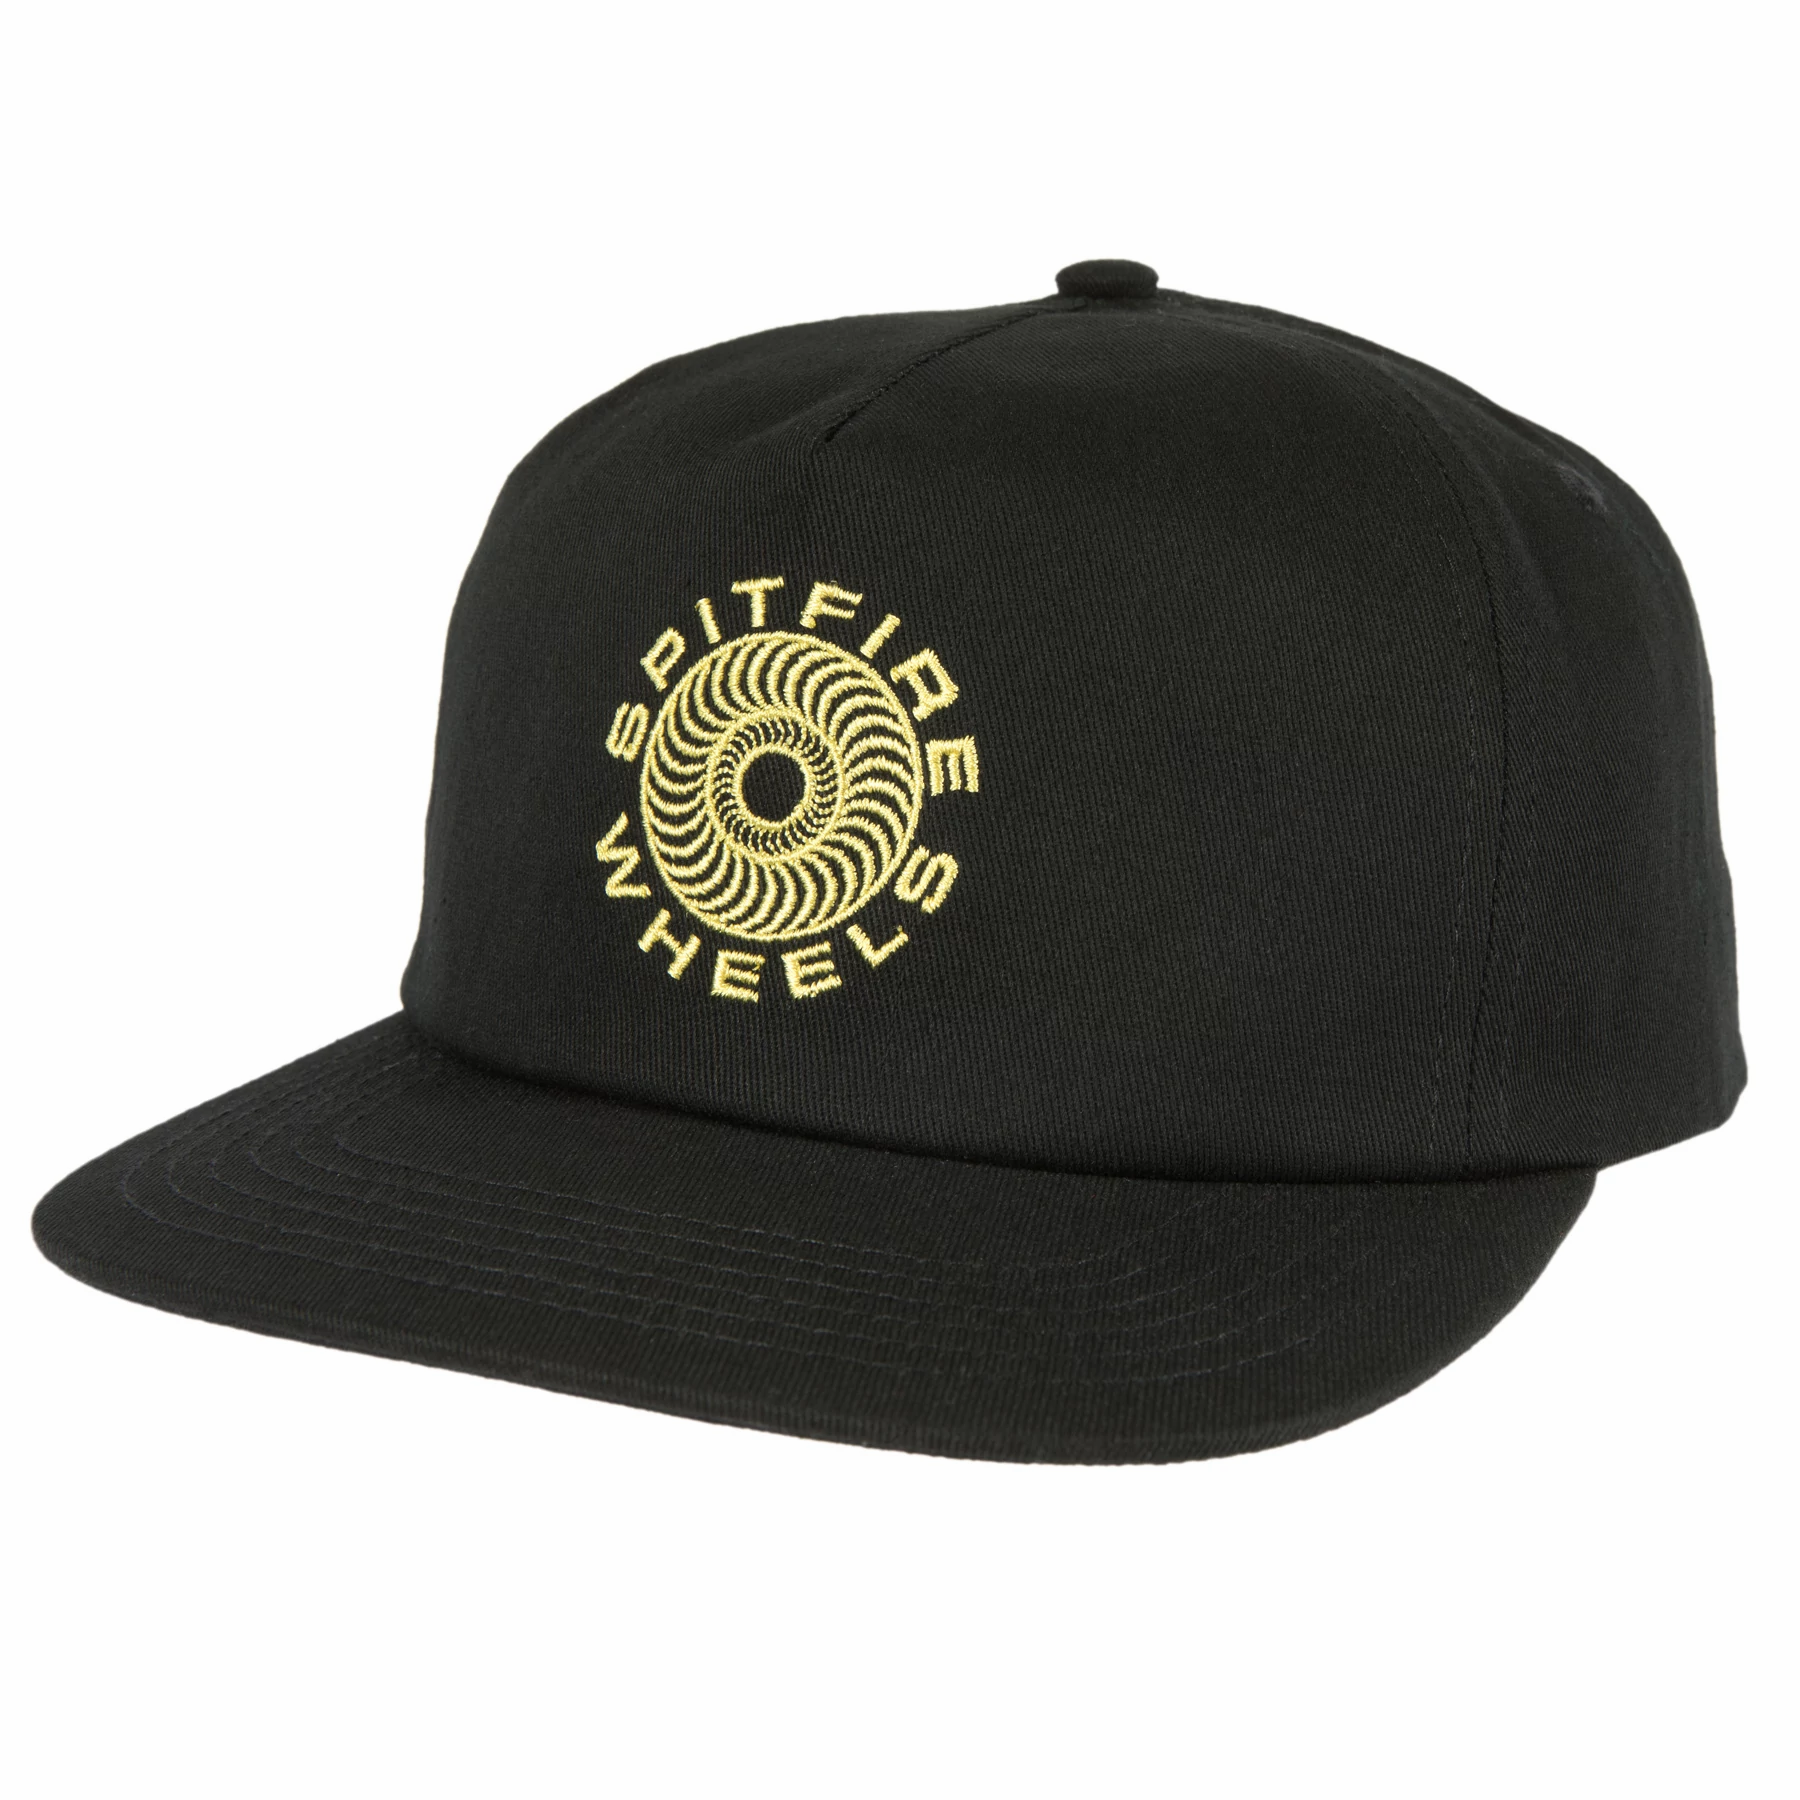 Black Classic 87' Swirl Spitfire Wheels Snapback Hat